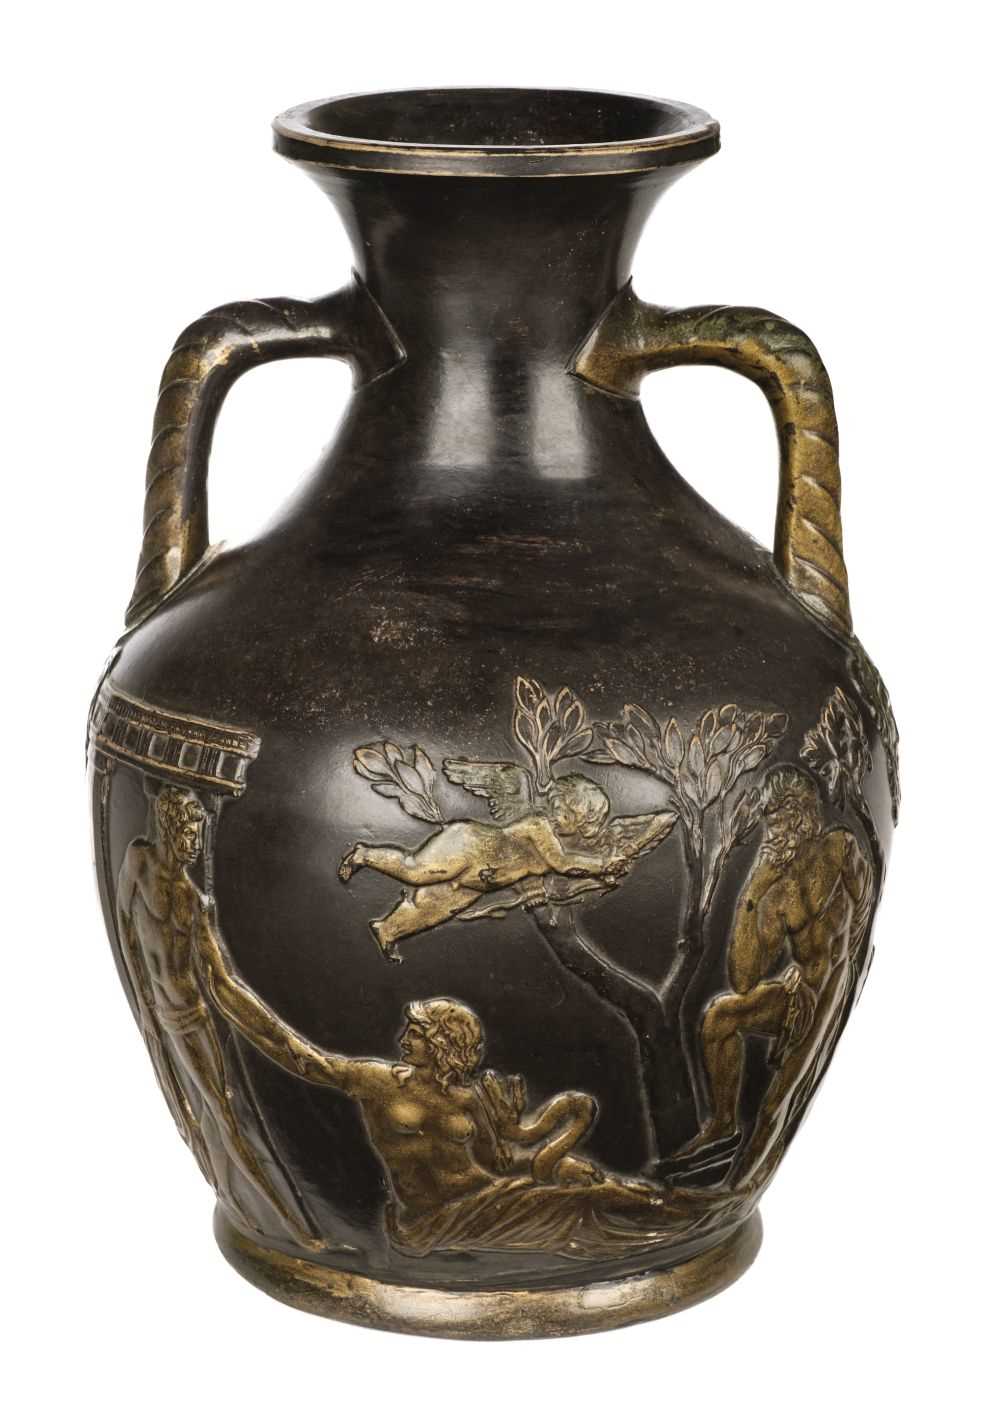 Lot 464 - Portland Vase. A 19th-century pottery vase by Gerbing & Stephan circa 1890